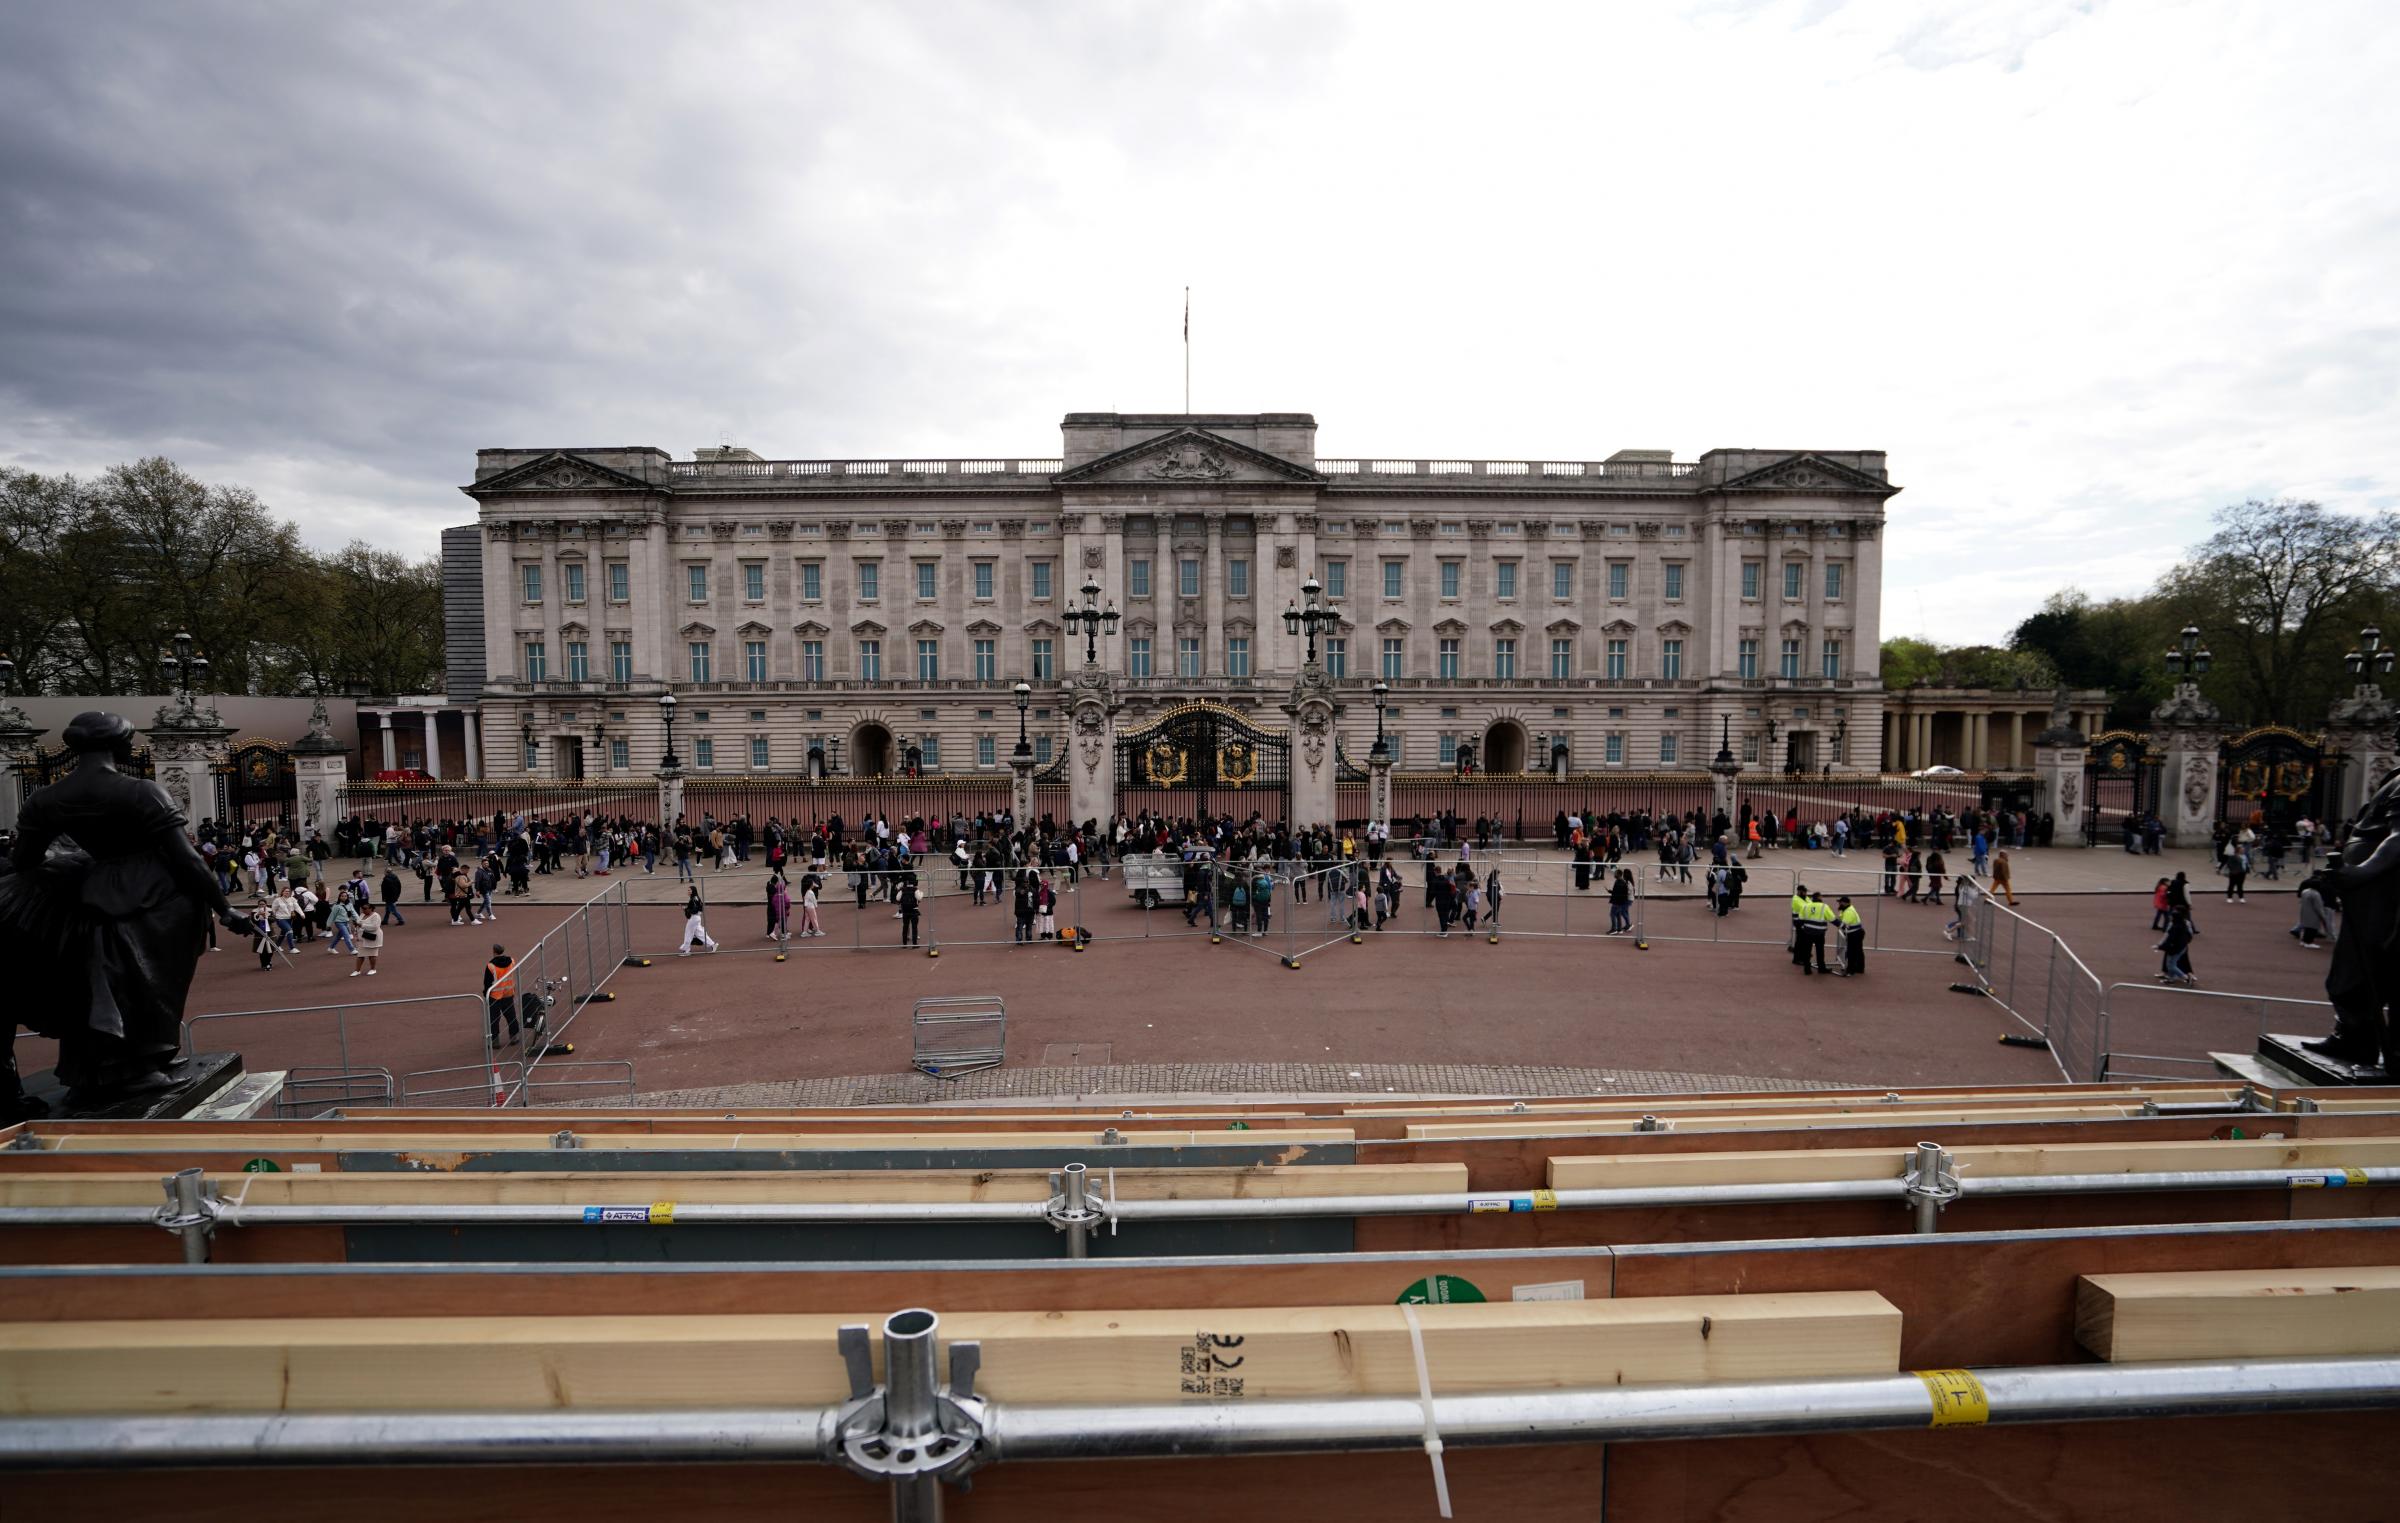 Seorang pria ditangkap di luar Istana Buckingham setelah melempar barang